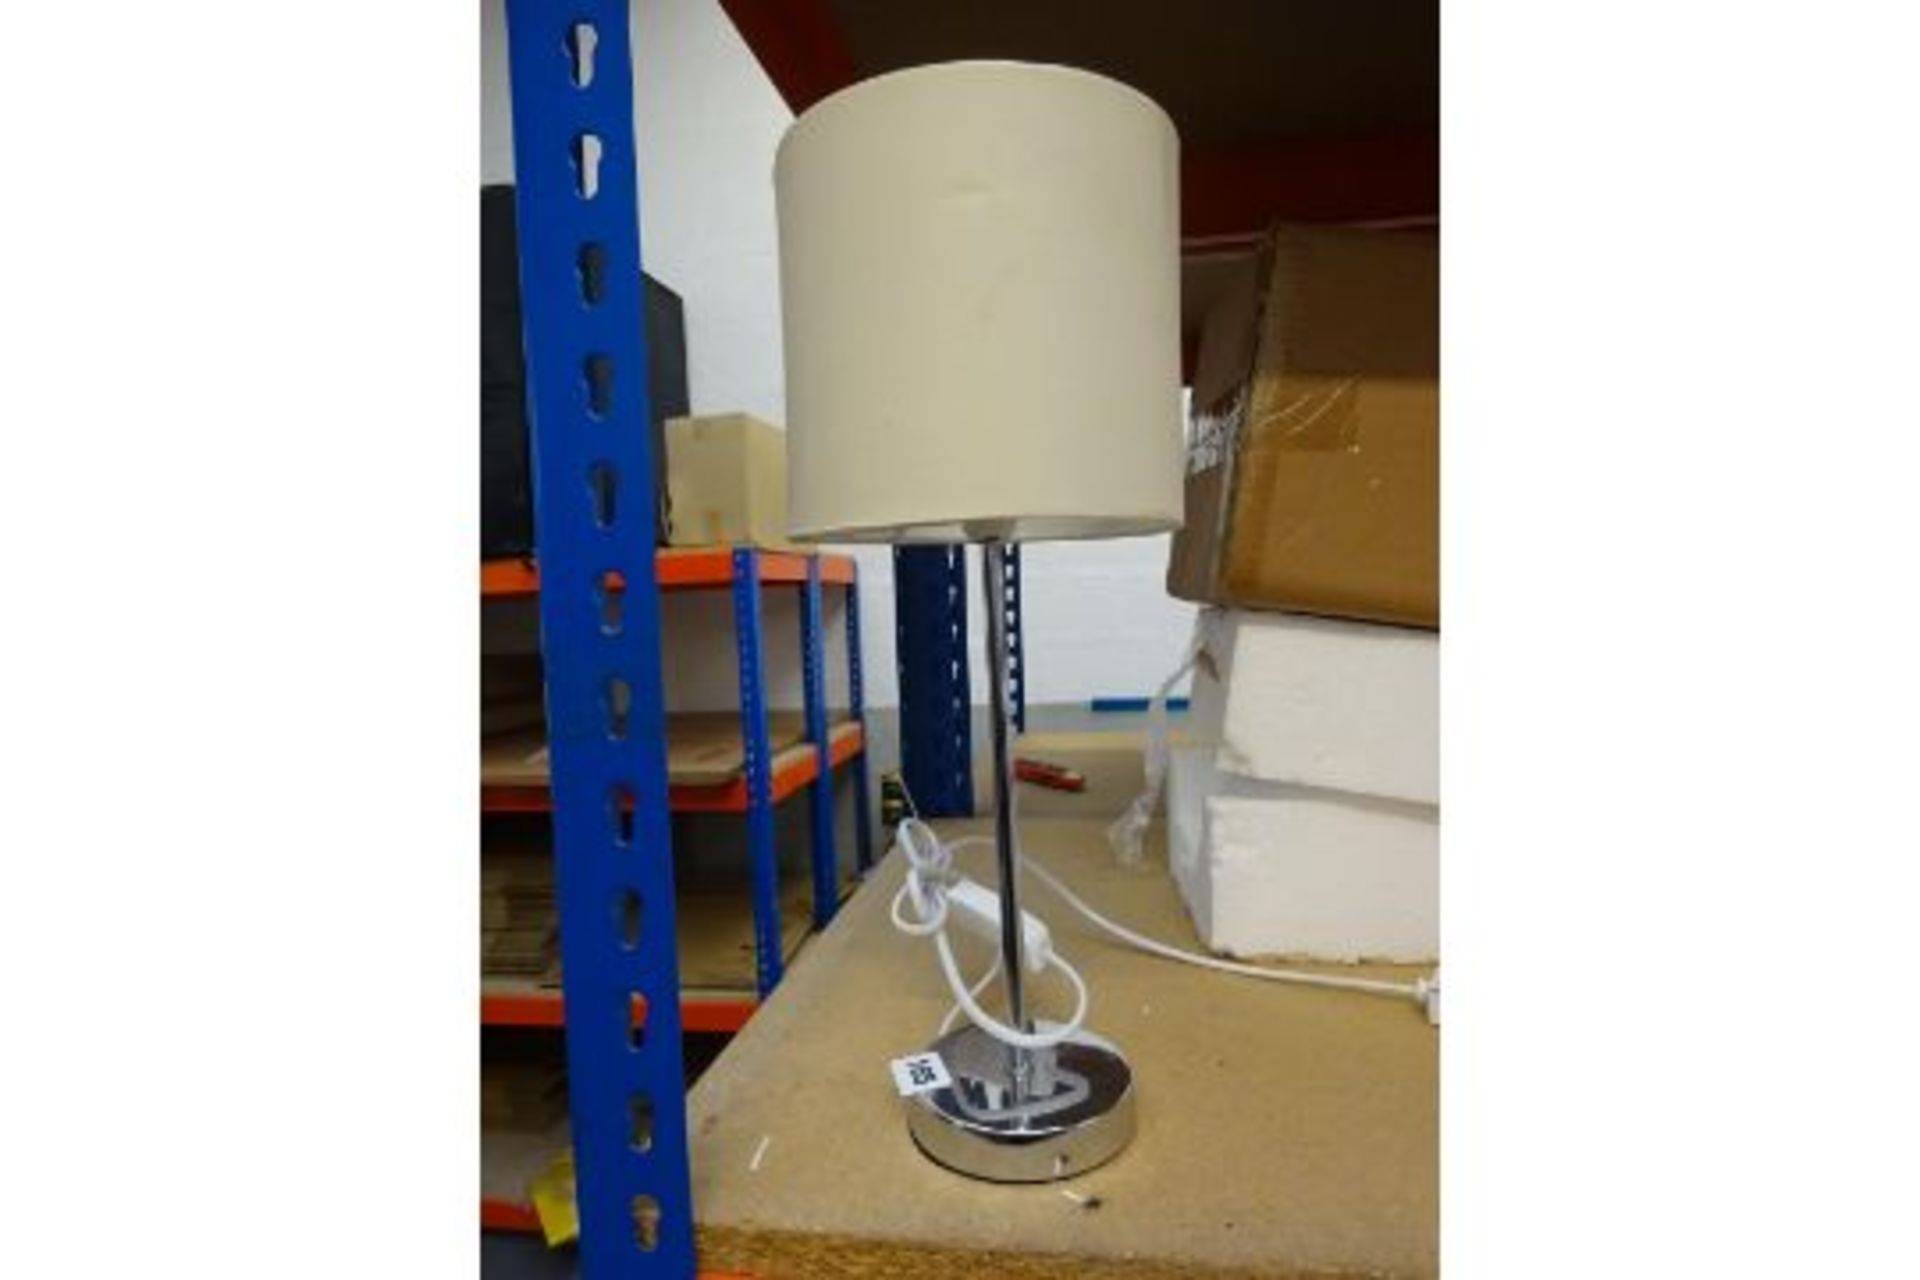 Chrome desk lamp with cream shade